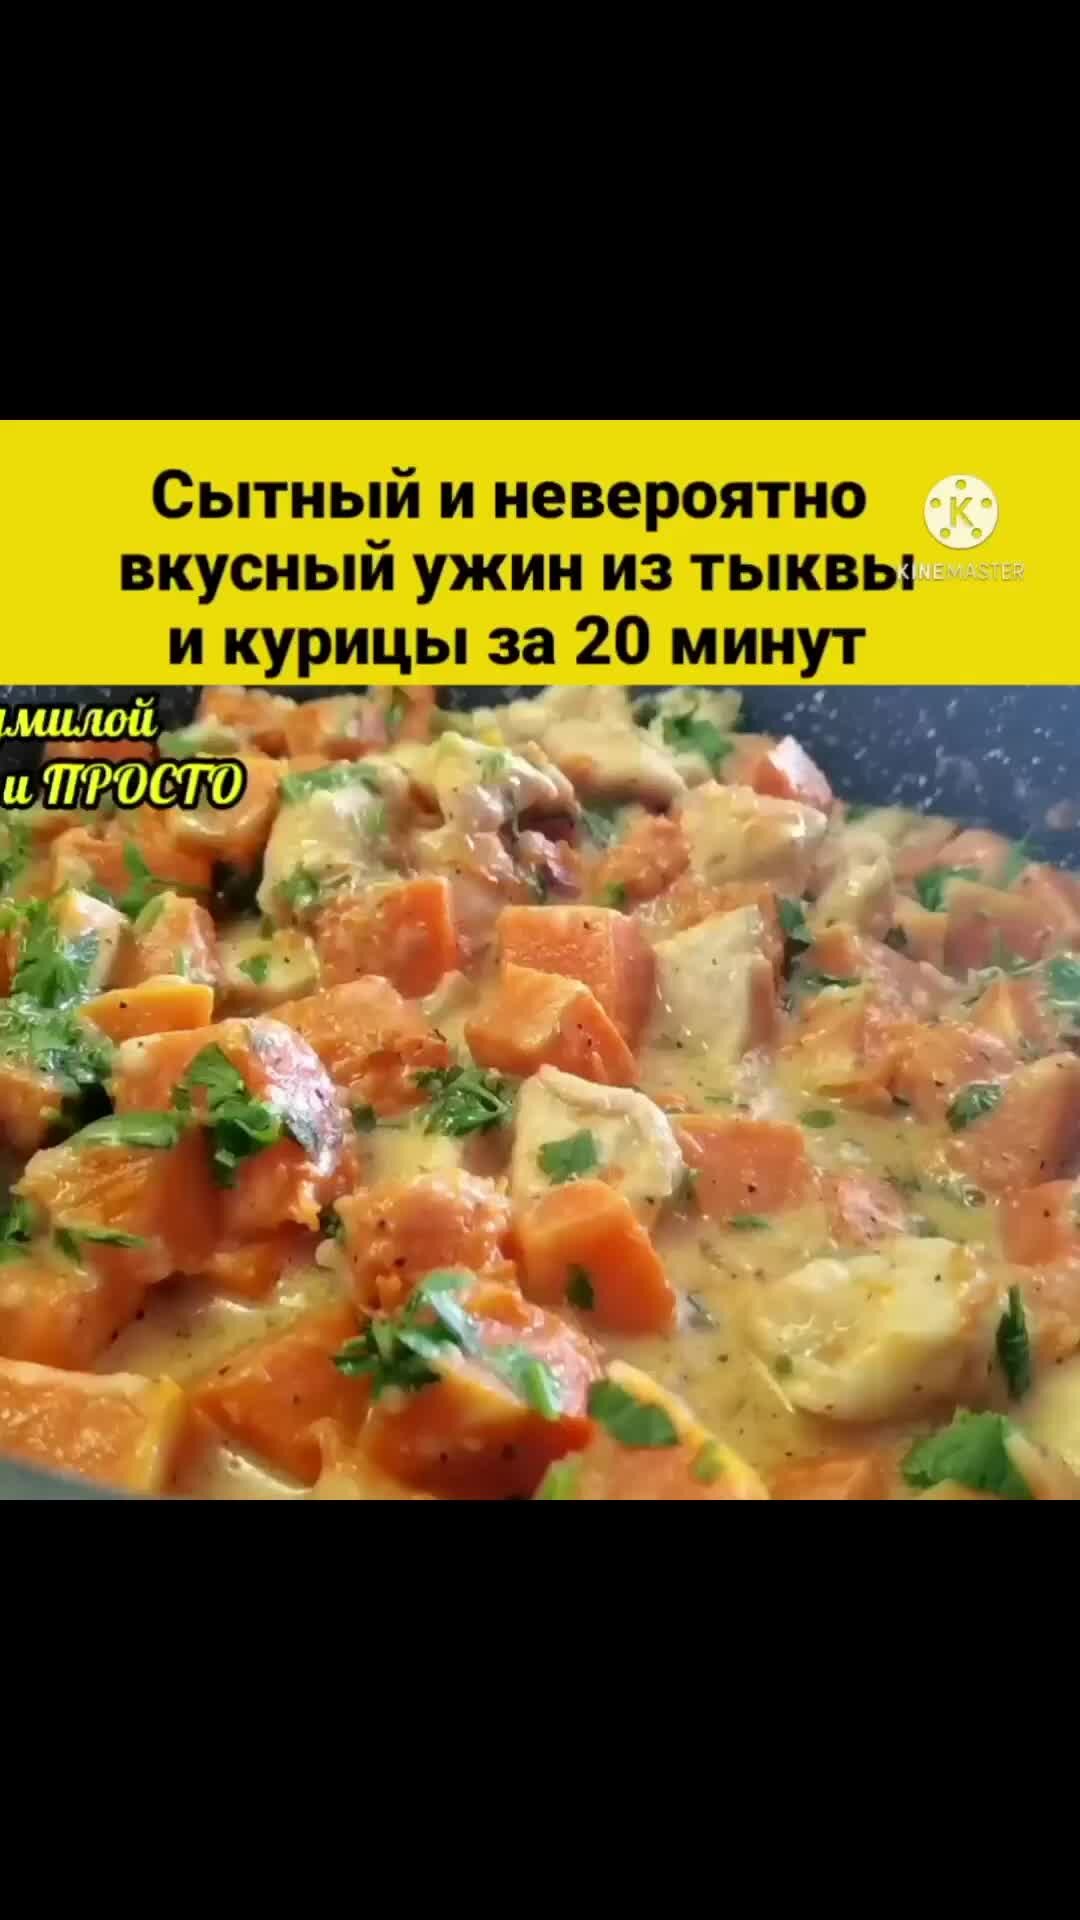 Кухня готовить еду - порно видео на kingplayclub.ru